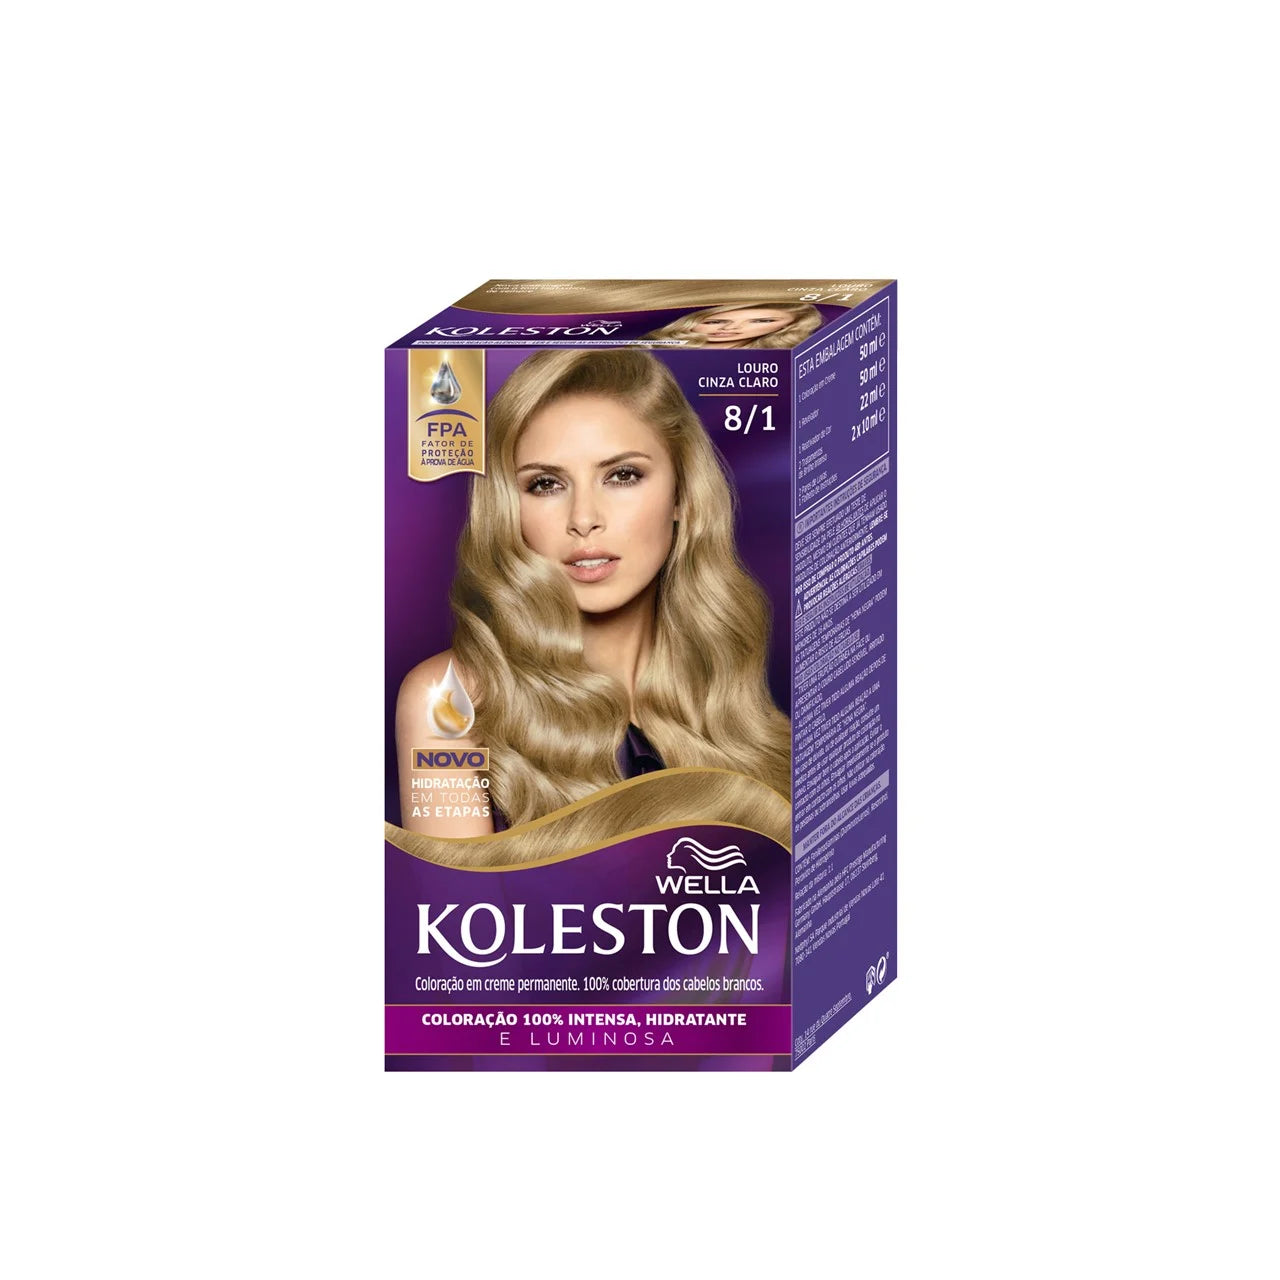 Wella Koleston Permanent Hair Color 8/1 Light Ash Blonde